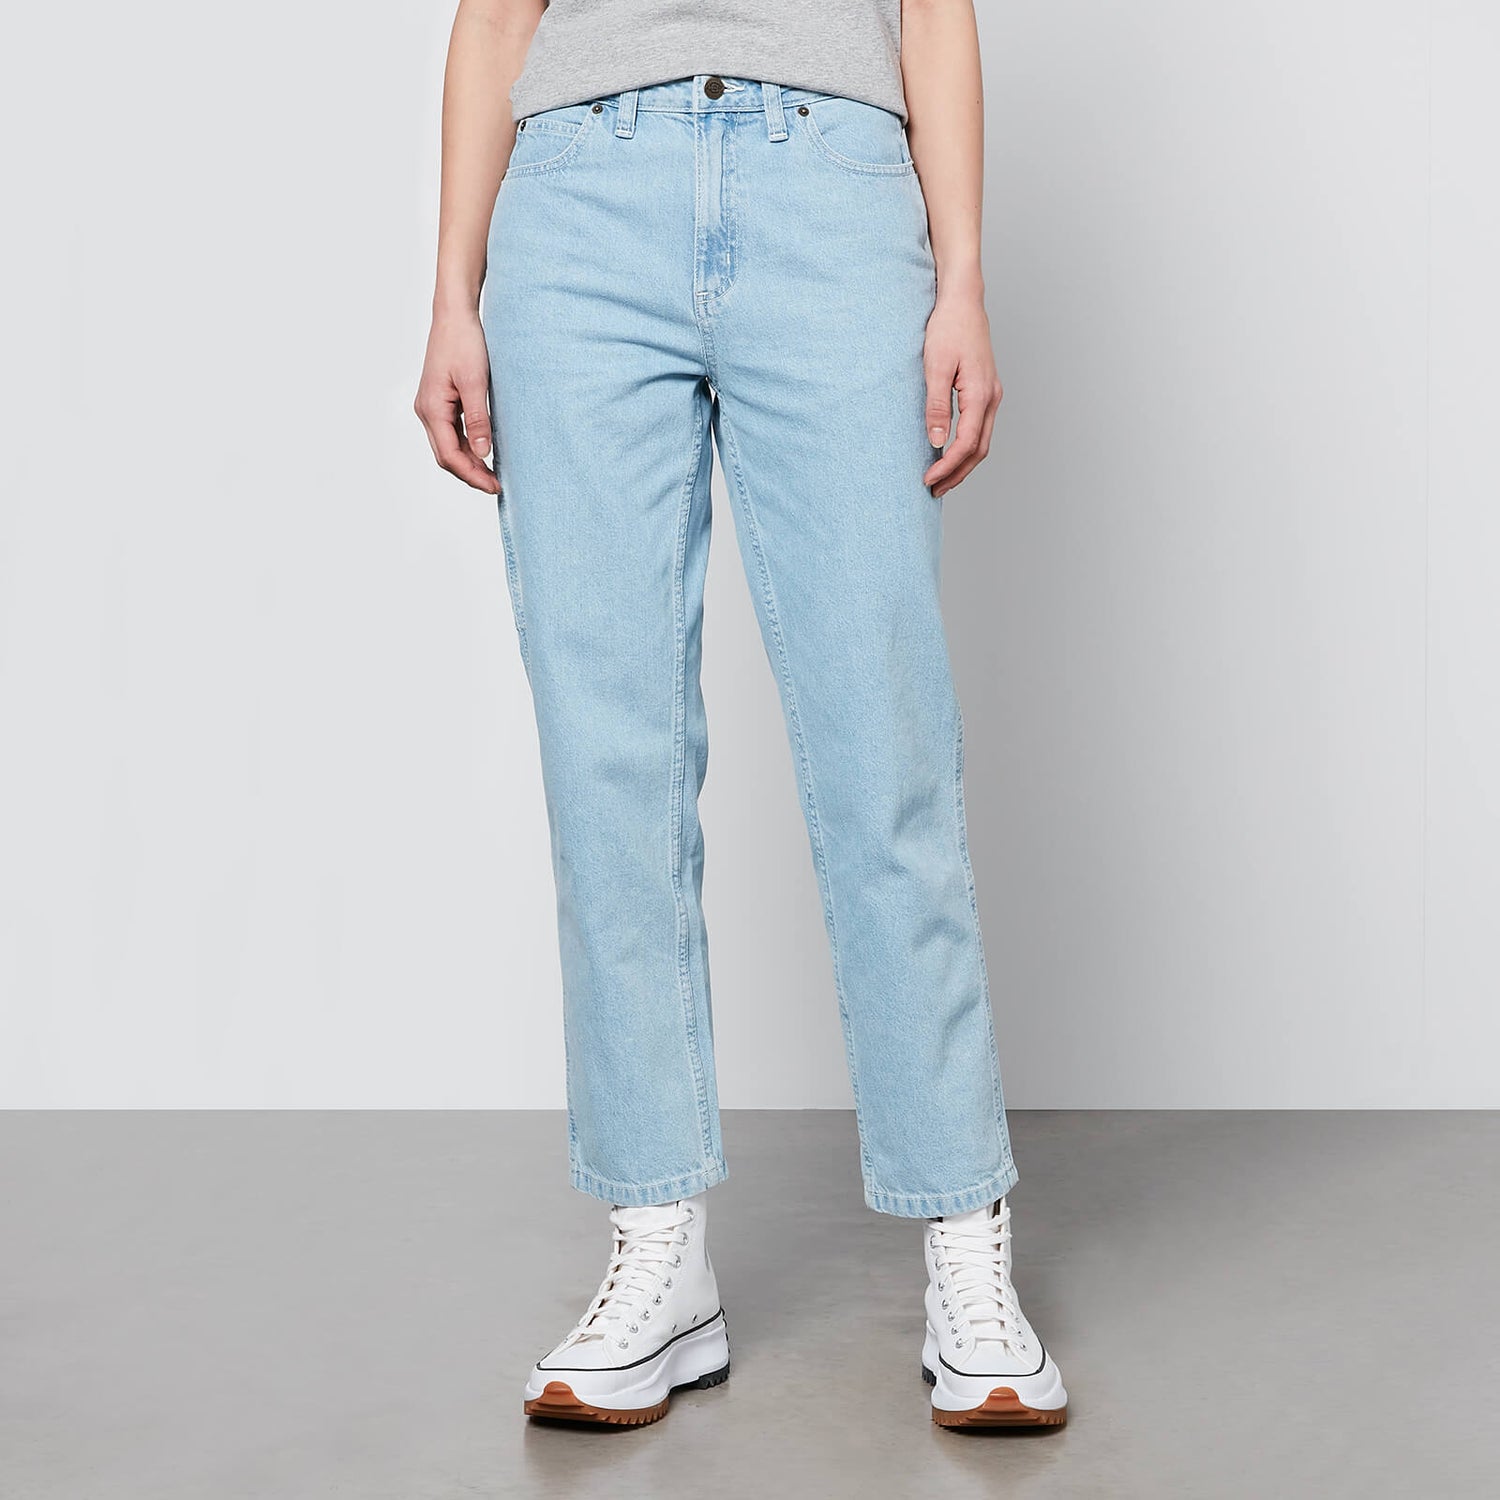 Dickies Ellendale Cotton Denim Jeans - W24